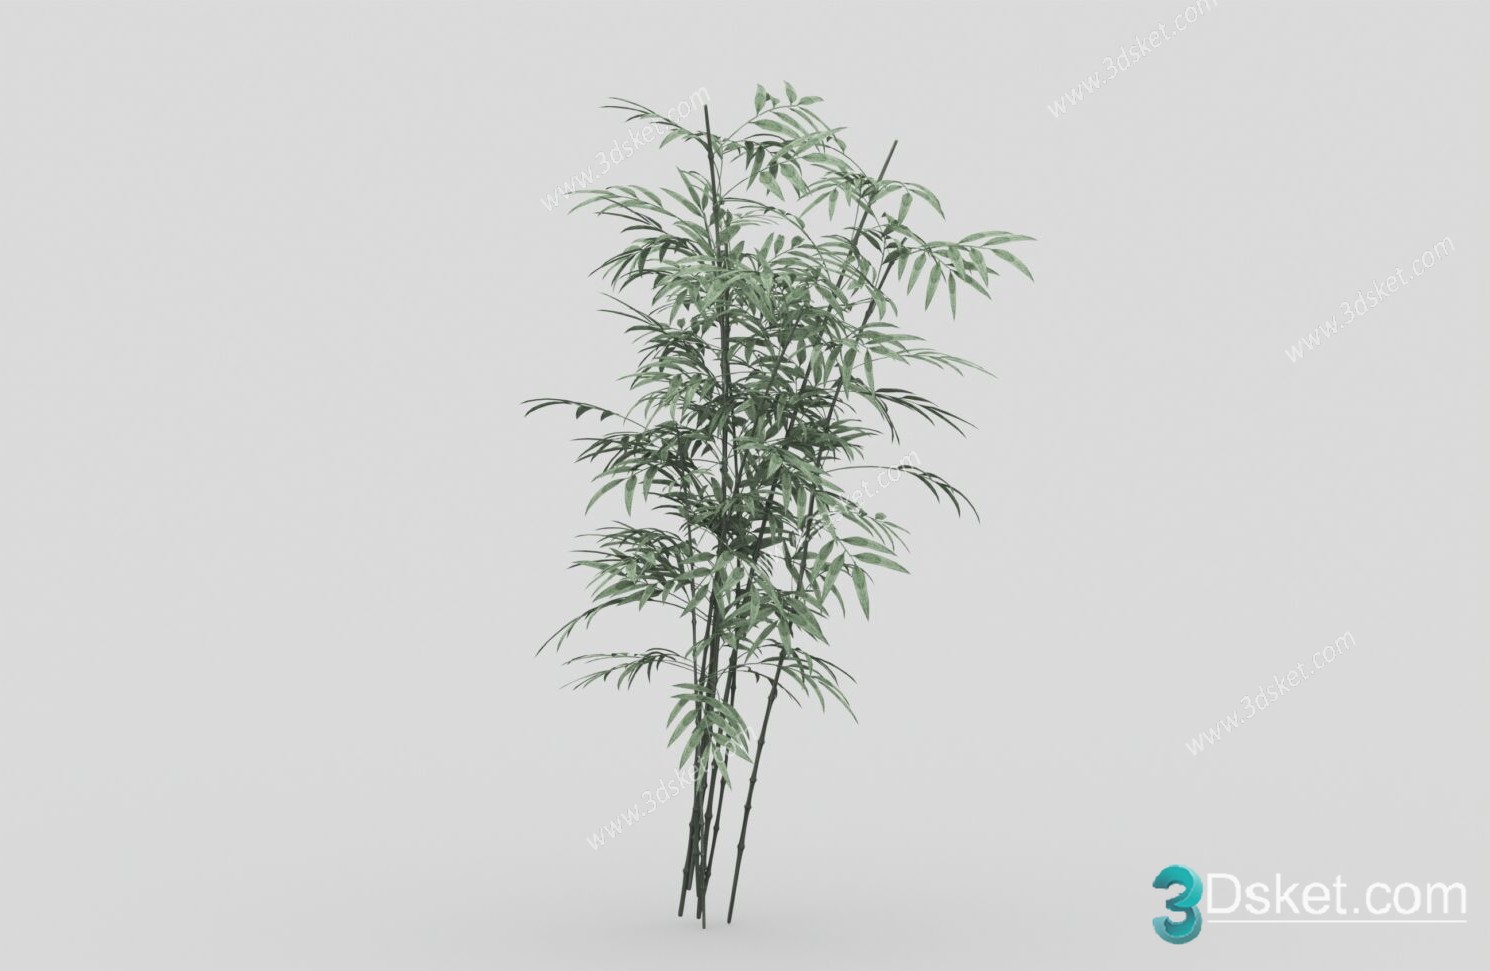 3D Model Tree Free Download T047